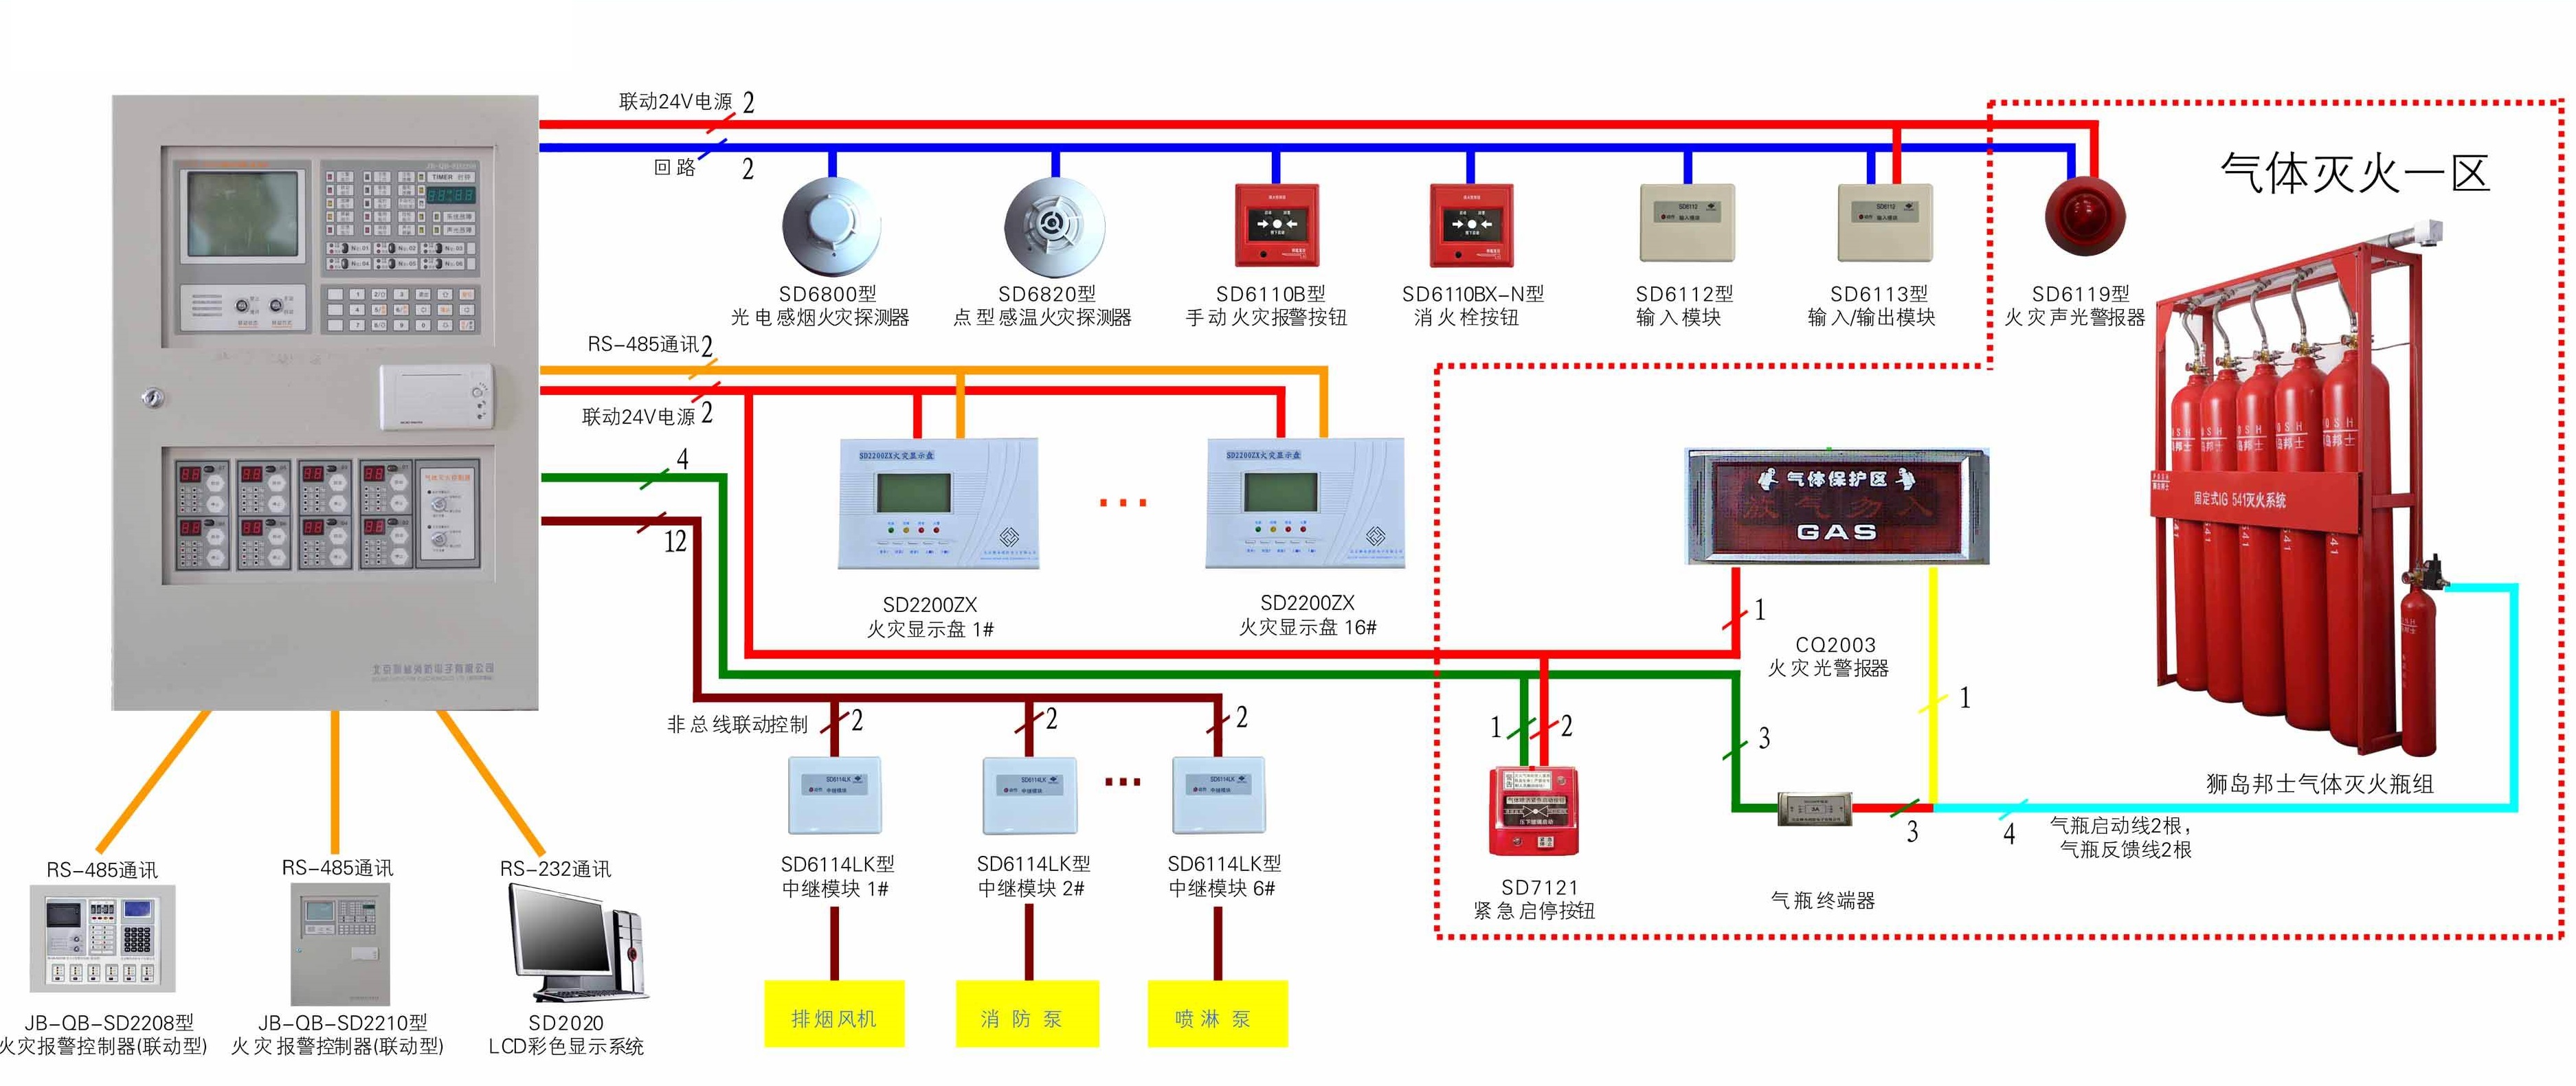 Diagram  Wiring Diagram For Fire Alarm System Full